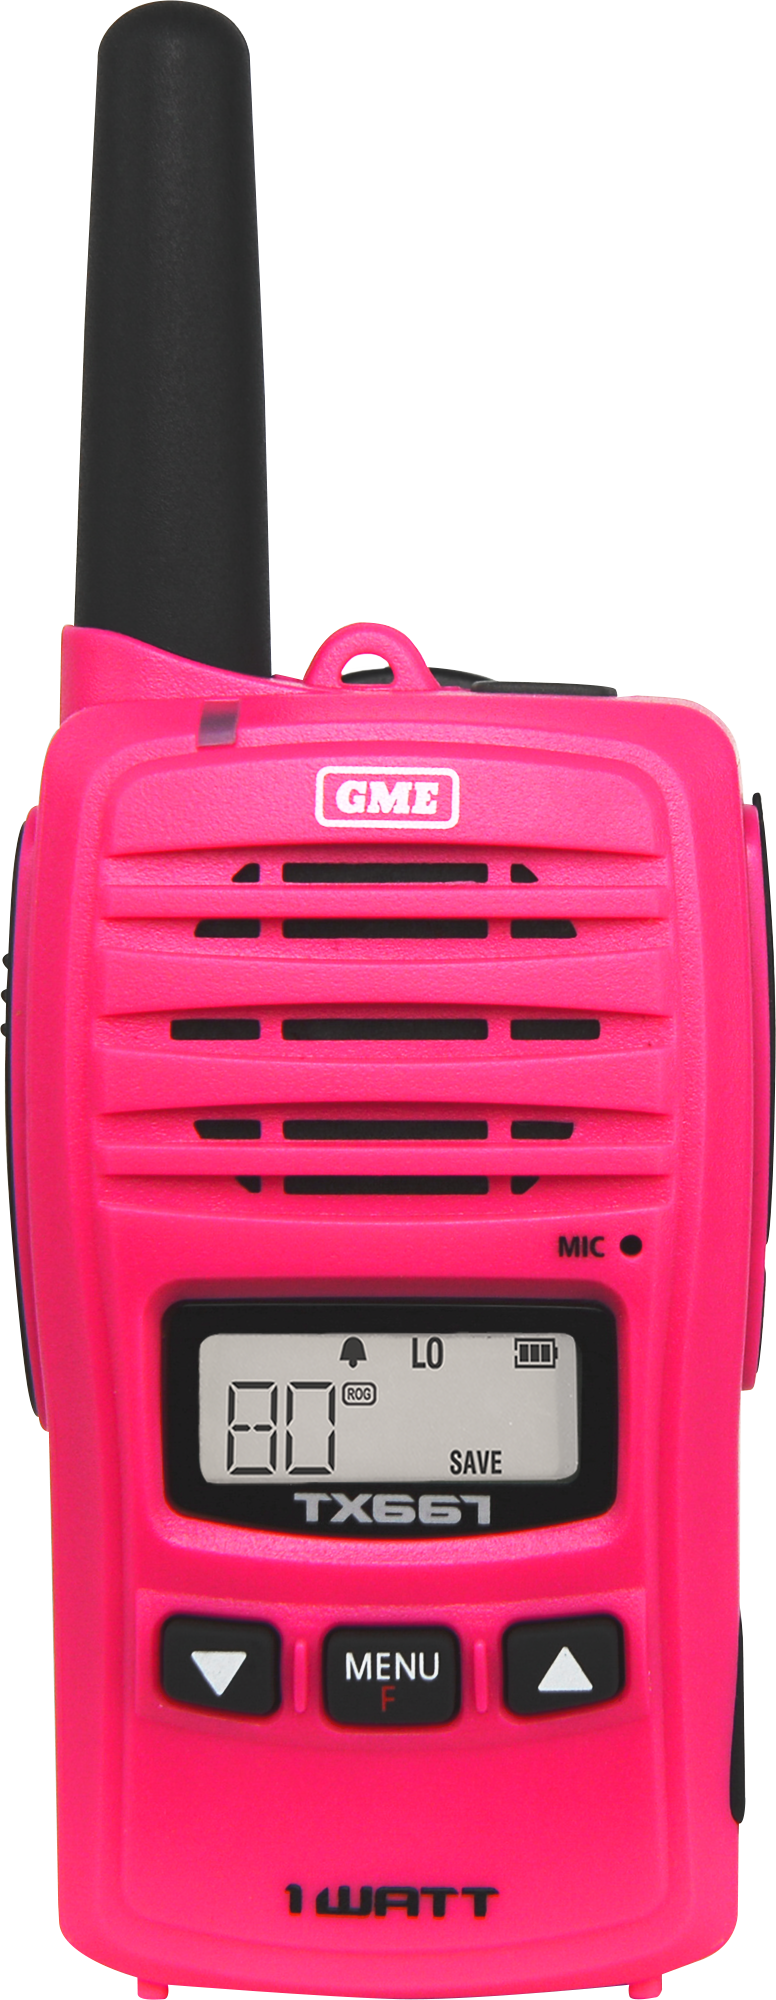 GME 1 WATT UHF CB HANDHELD RADIO - MCGRATH FOUNDATION PINK